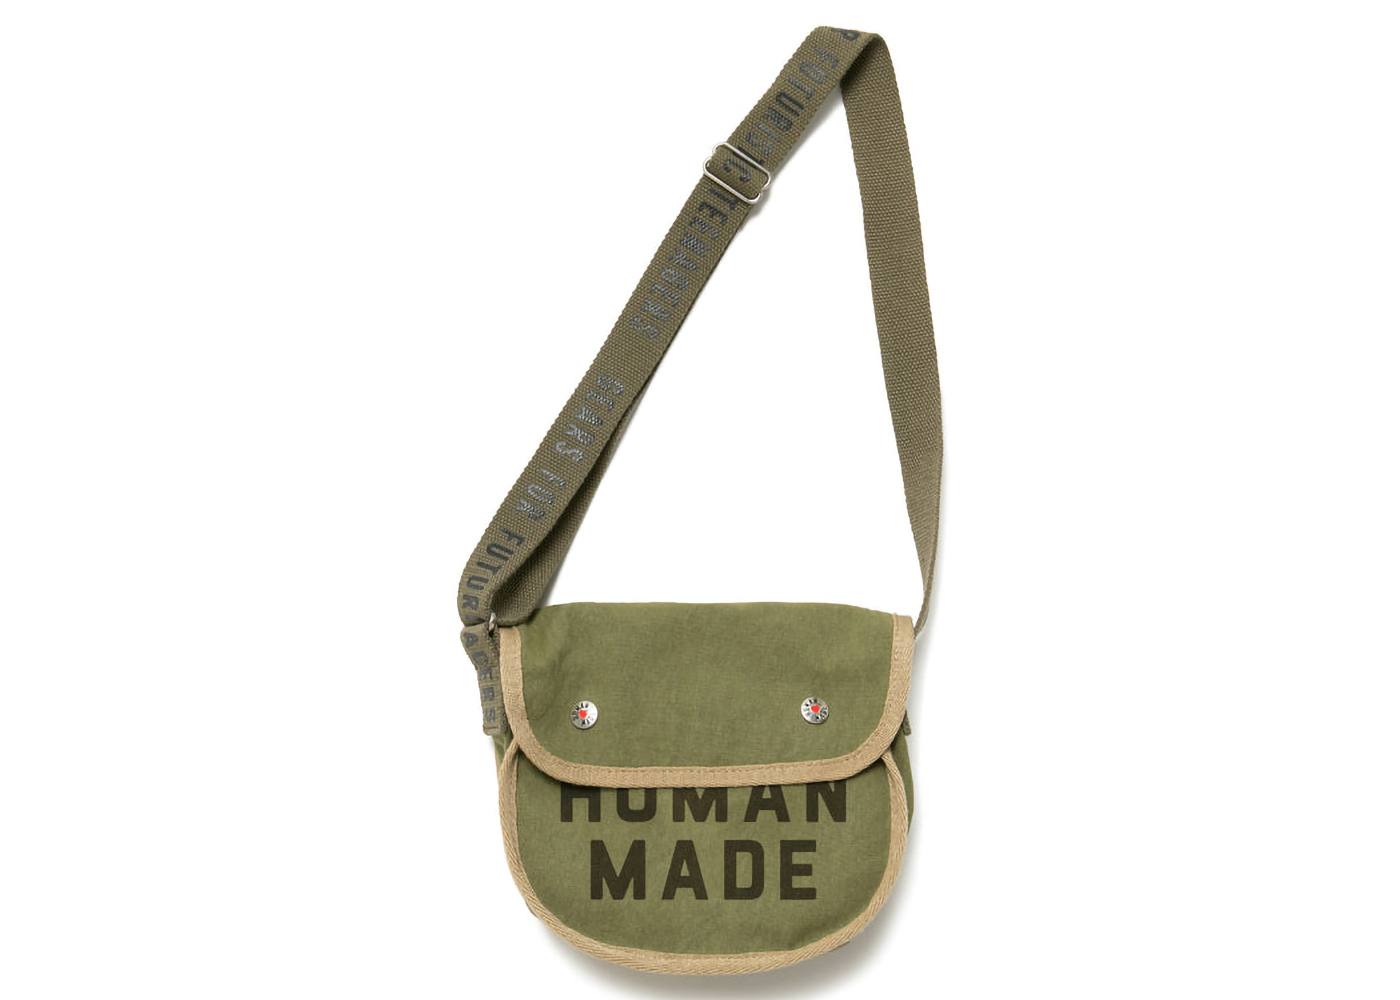 Human Made Tool Bag Small Olive Drab - SS23 - US